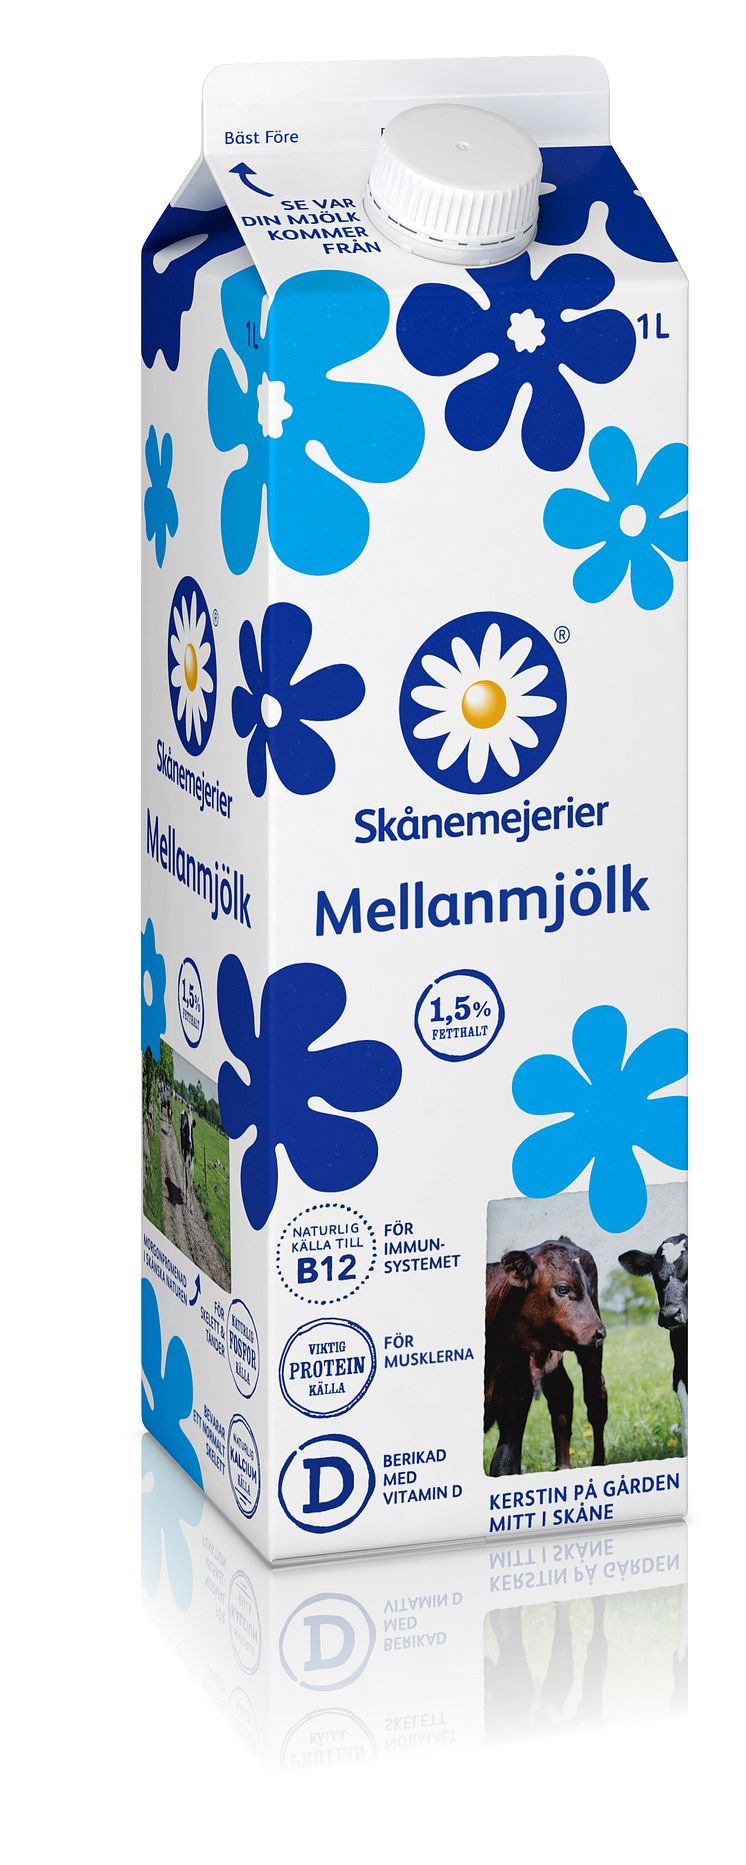 Skånemejeriers Mellanmjölk 1 liter i ny kostym